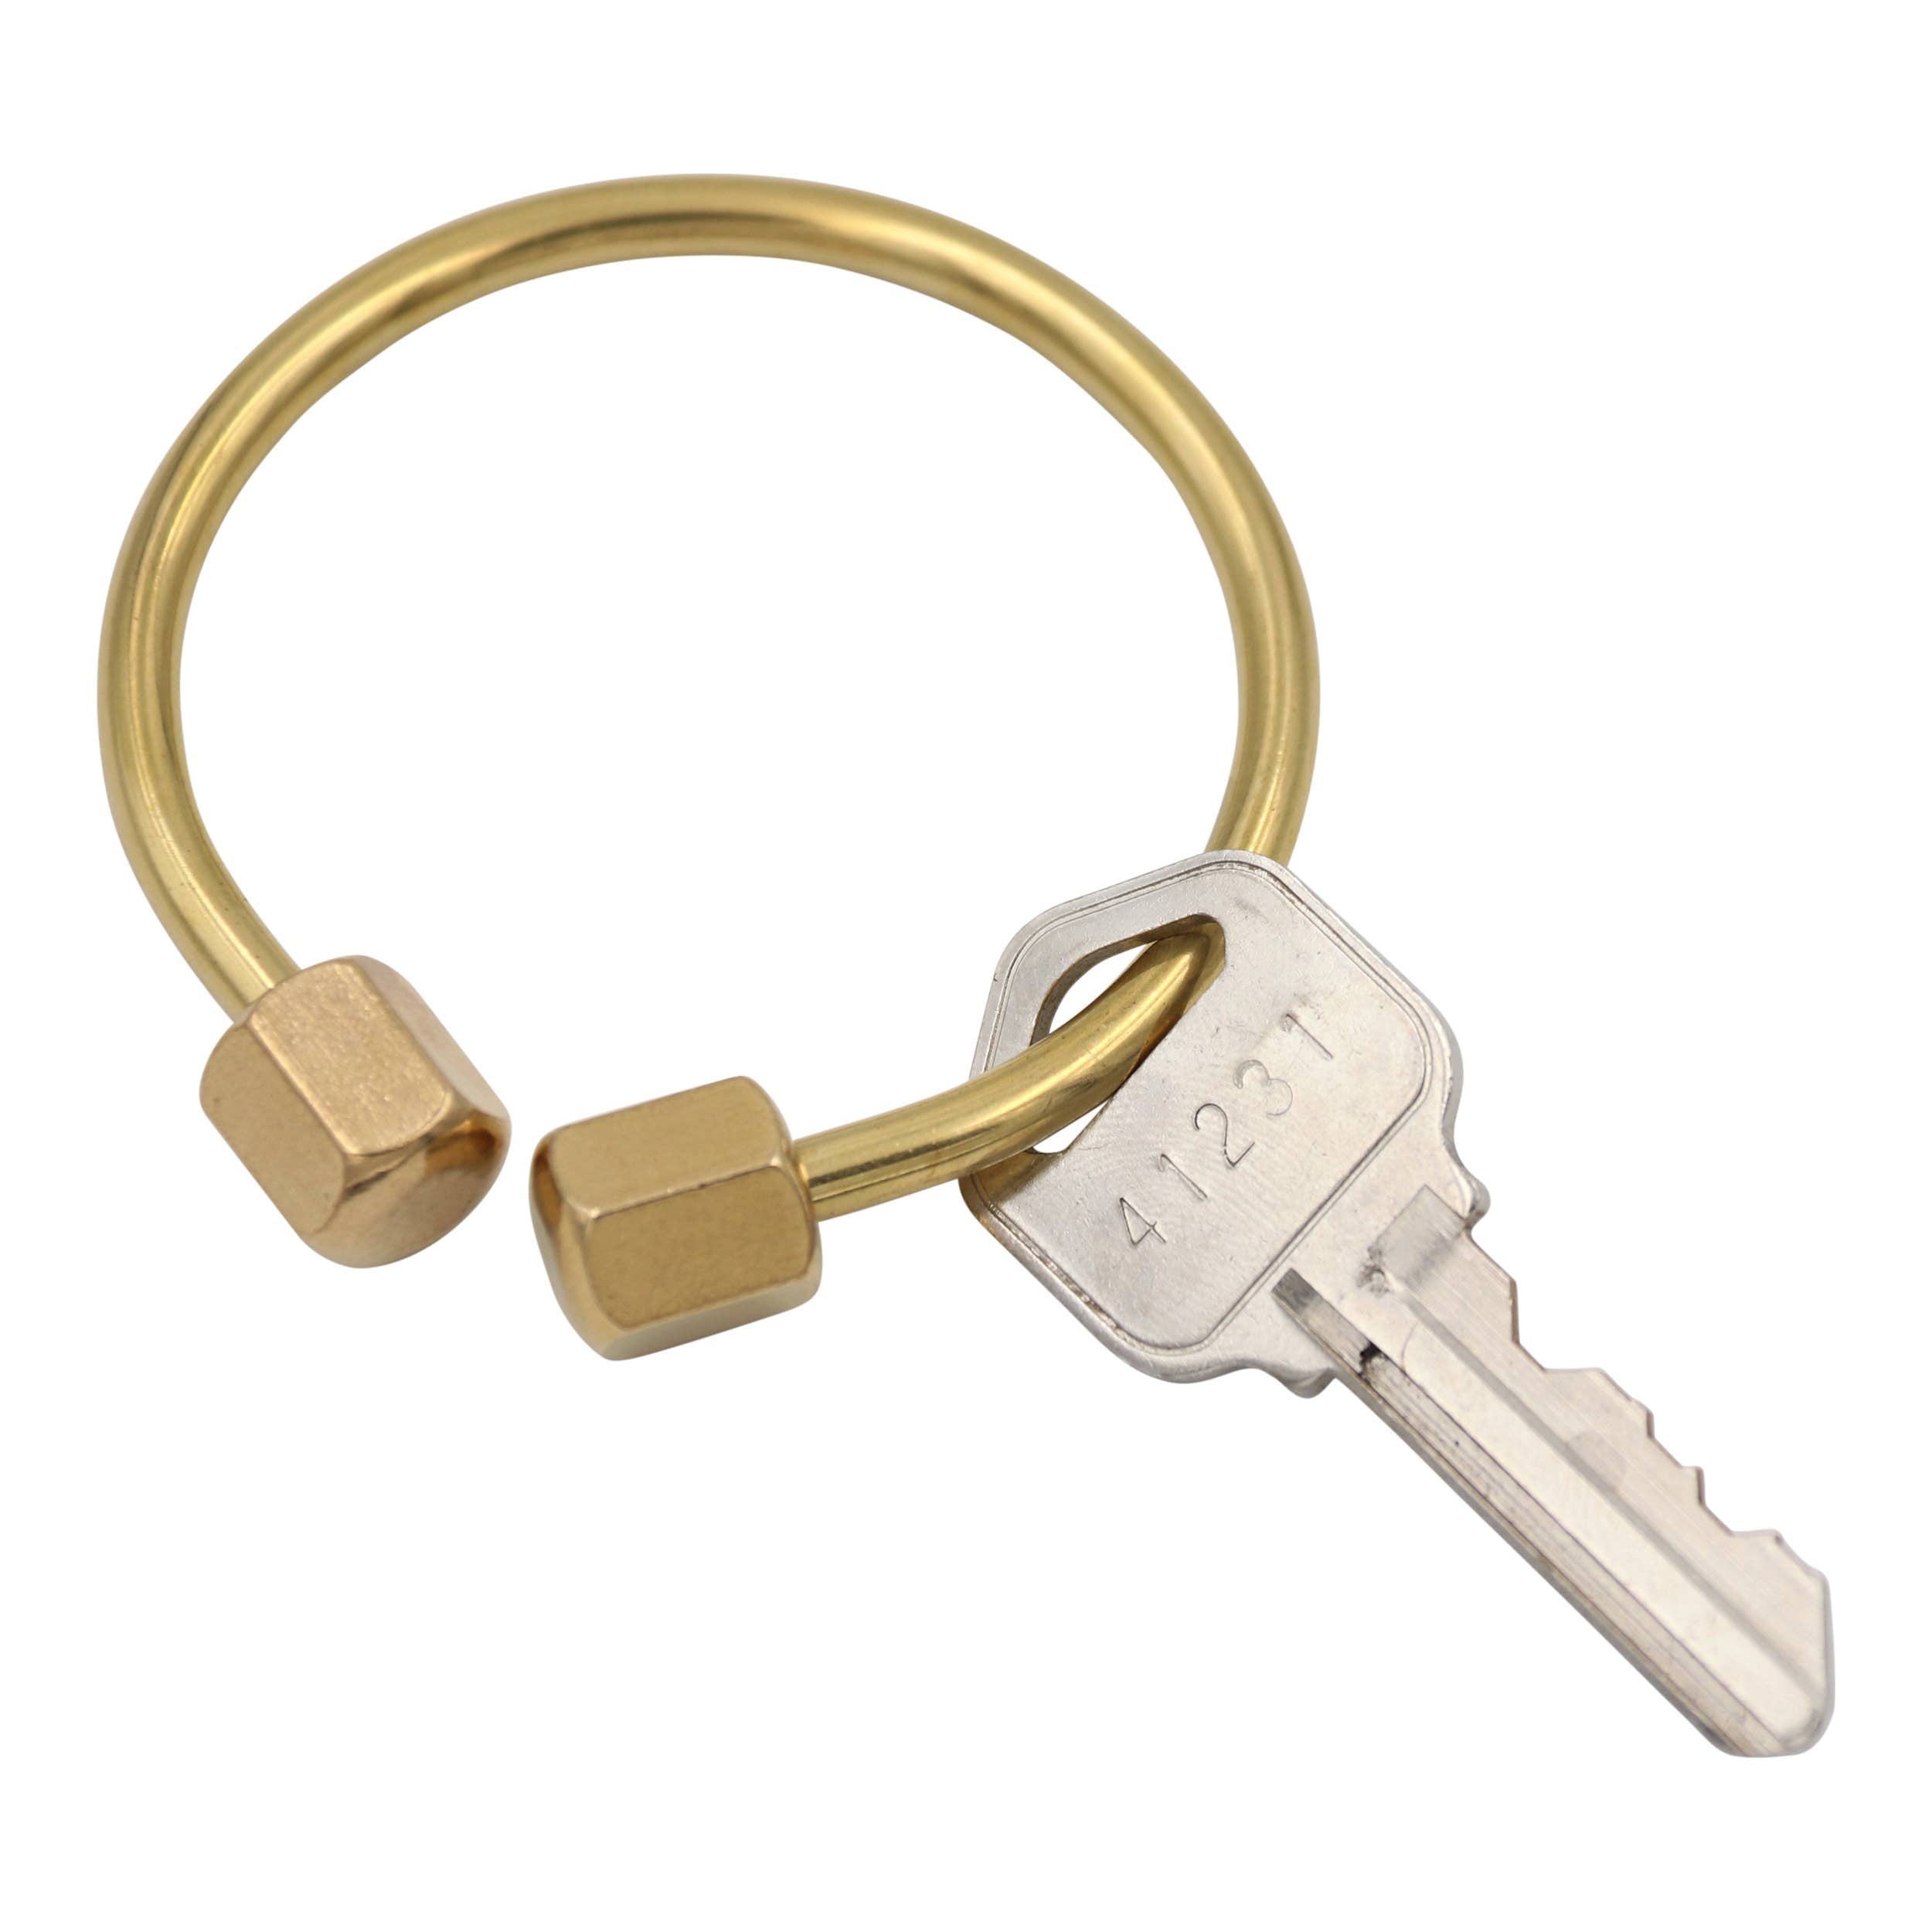  SEWACC 100 Sets Heat Transfer Key Chain Vintage Key